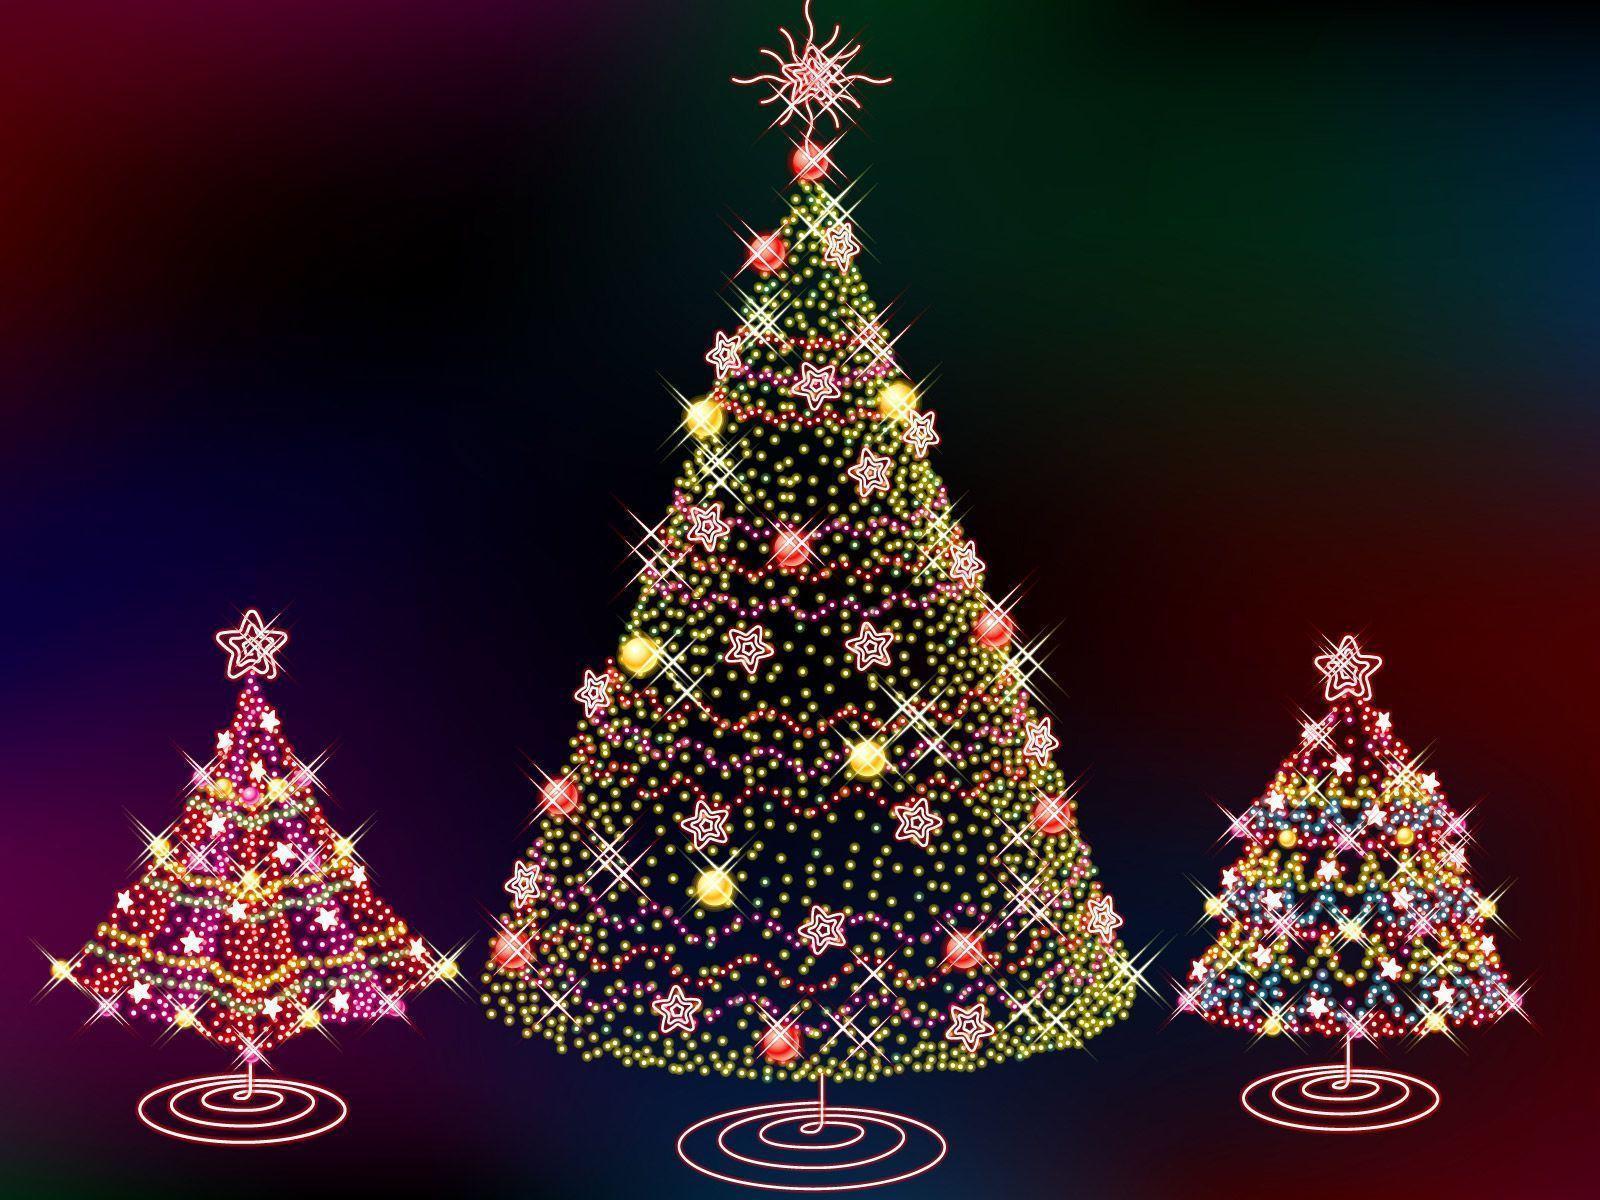 Merry Christmas Tree Wallpaper free download | PixelsTalk.Net